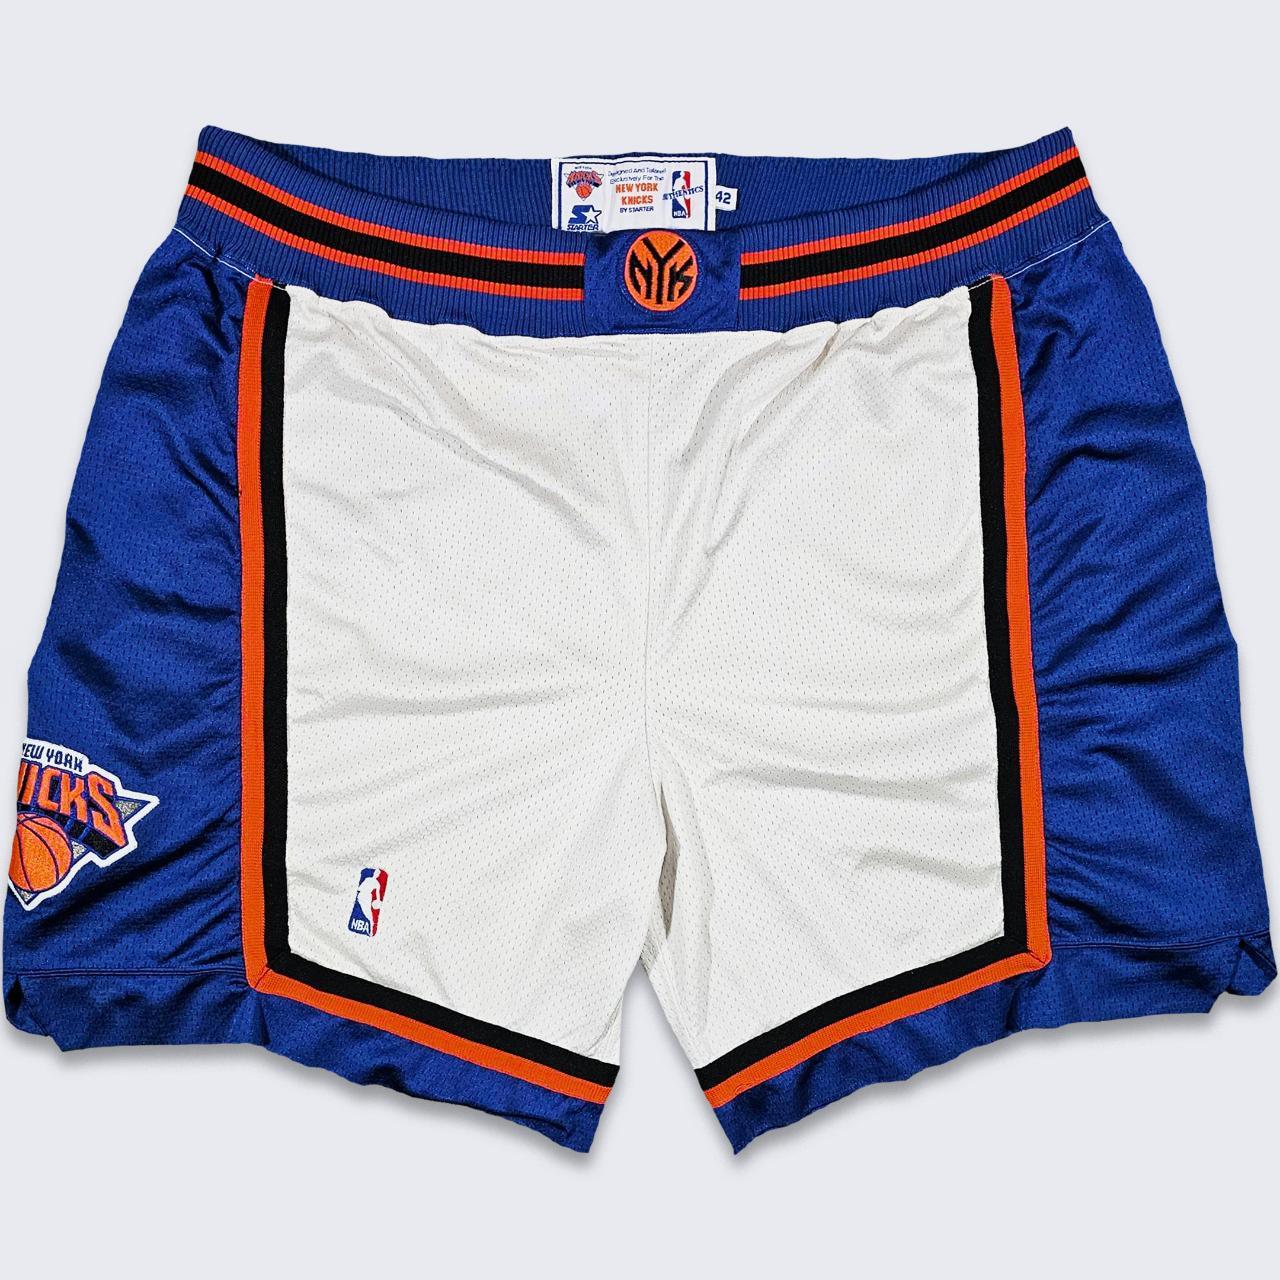 New York Knicks White JUST DON Shorts